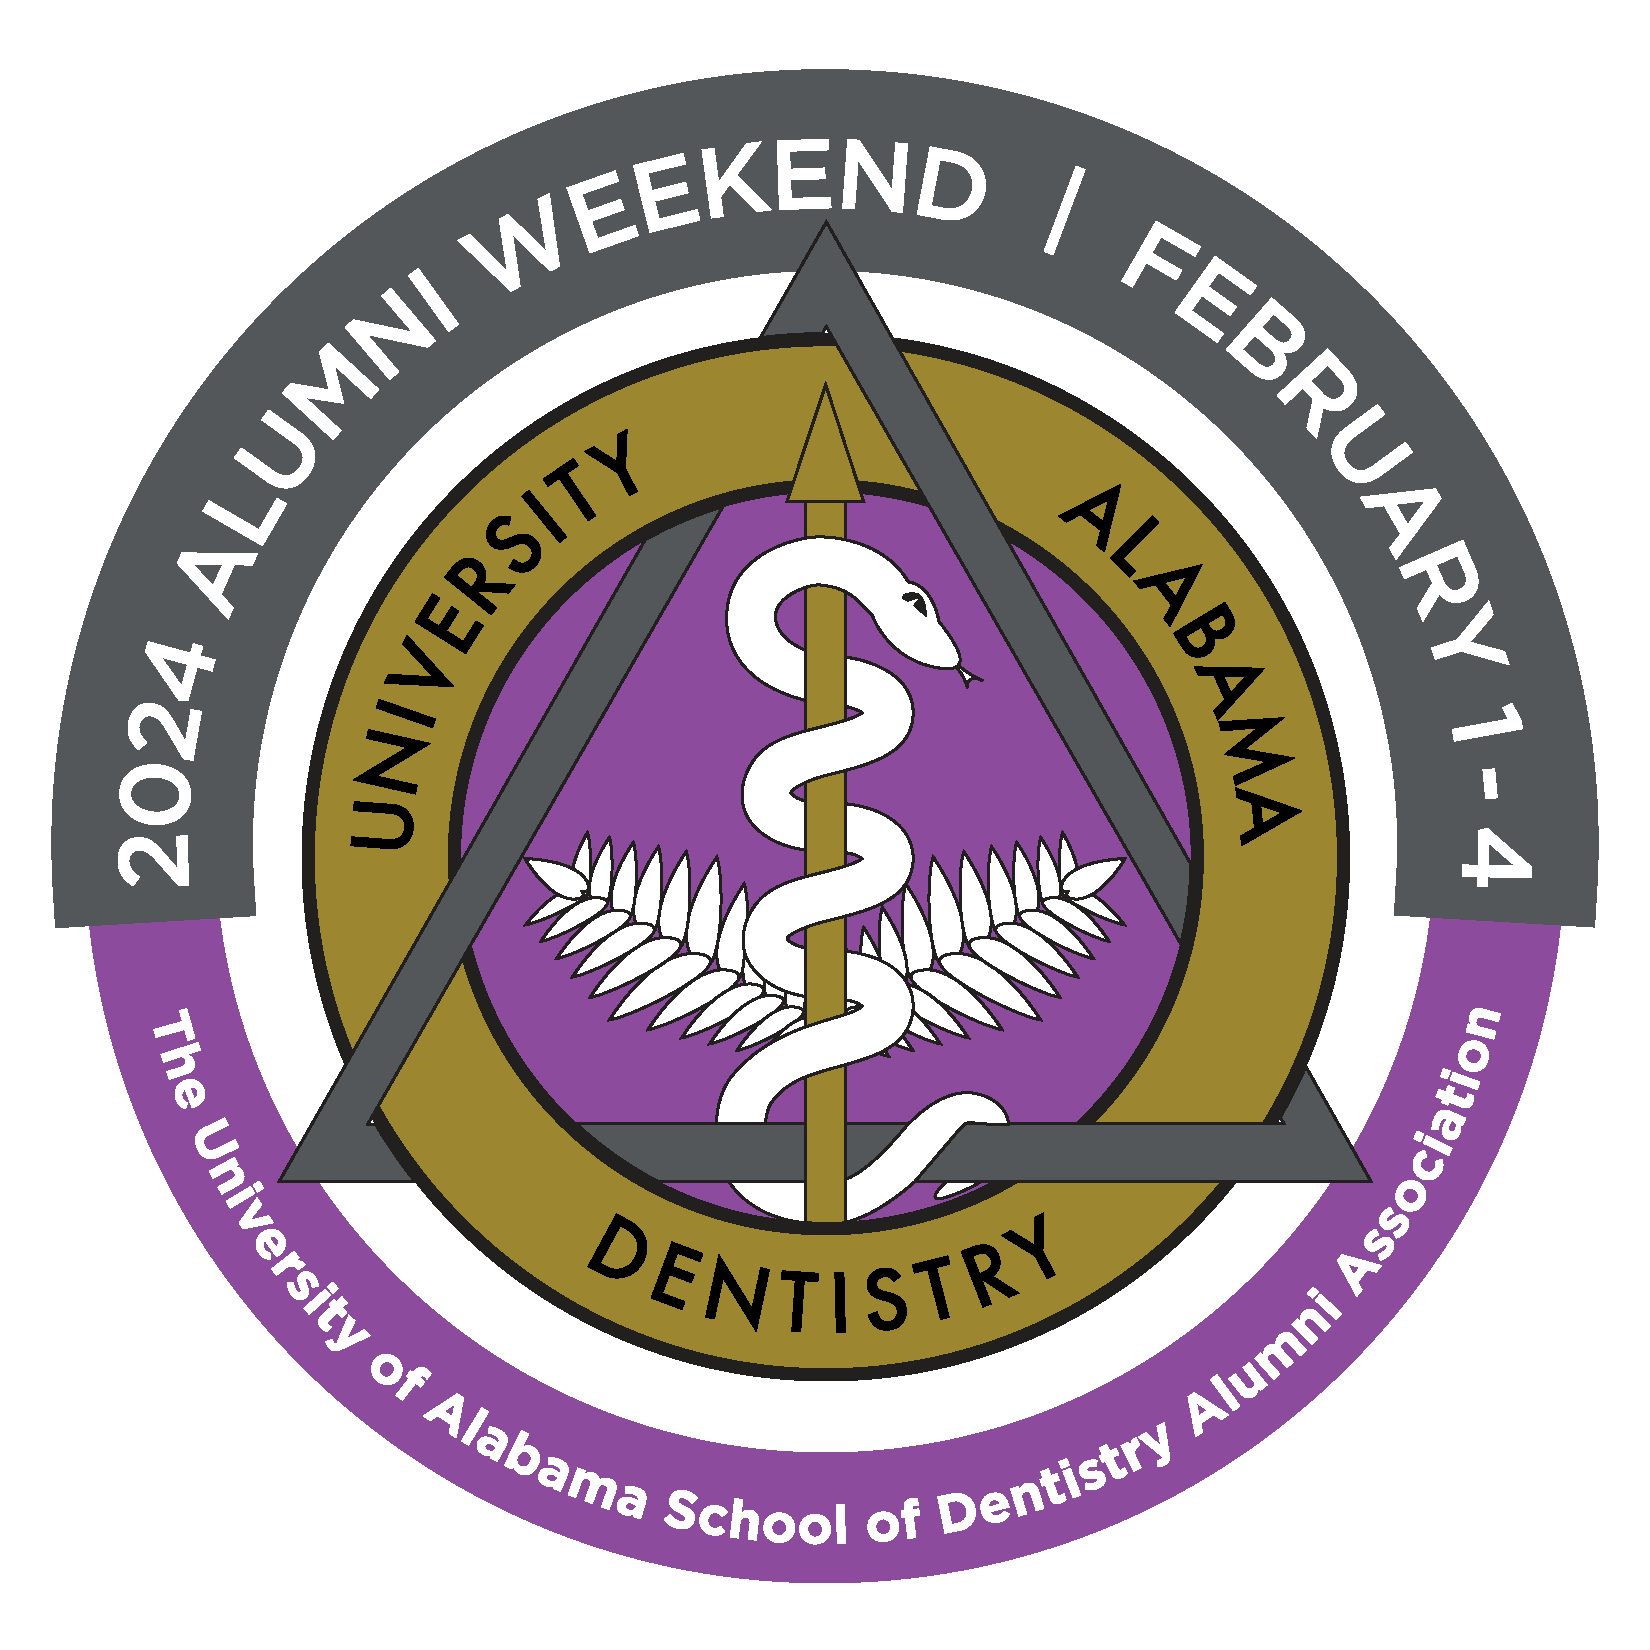 UAB SOD Dentistry Alumni Weekend Emblem